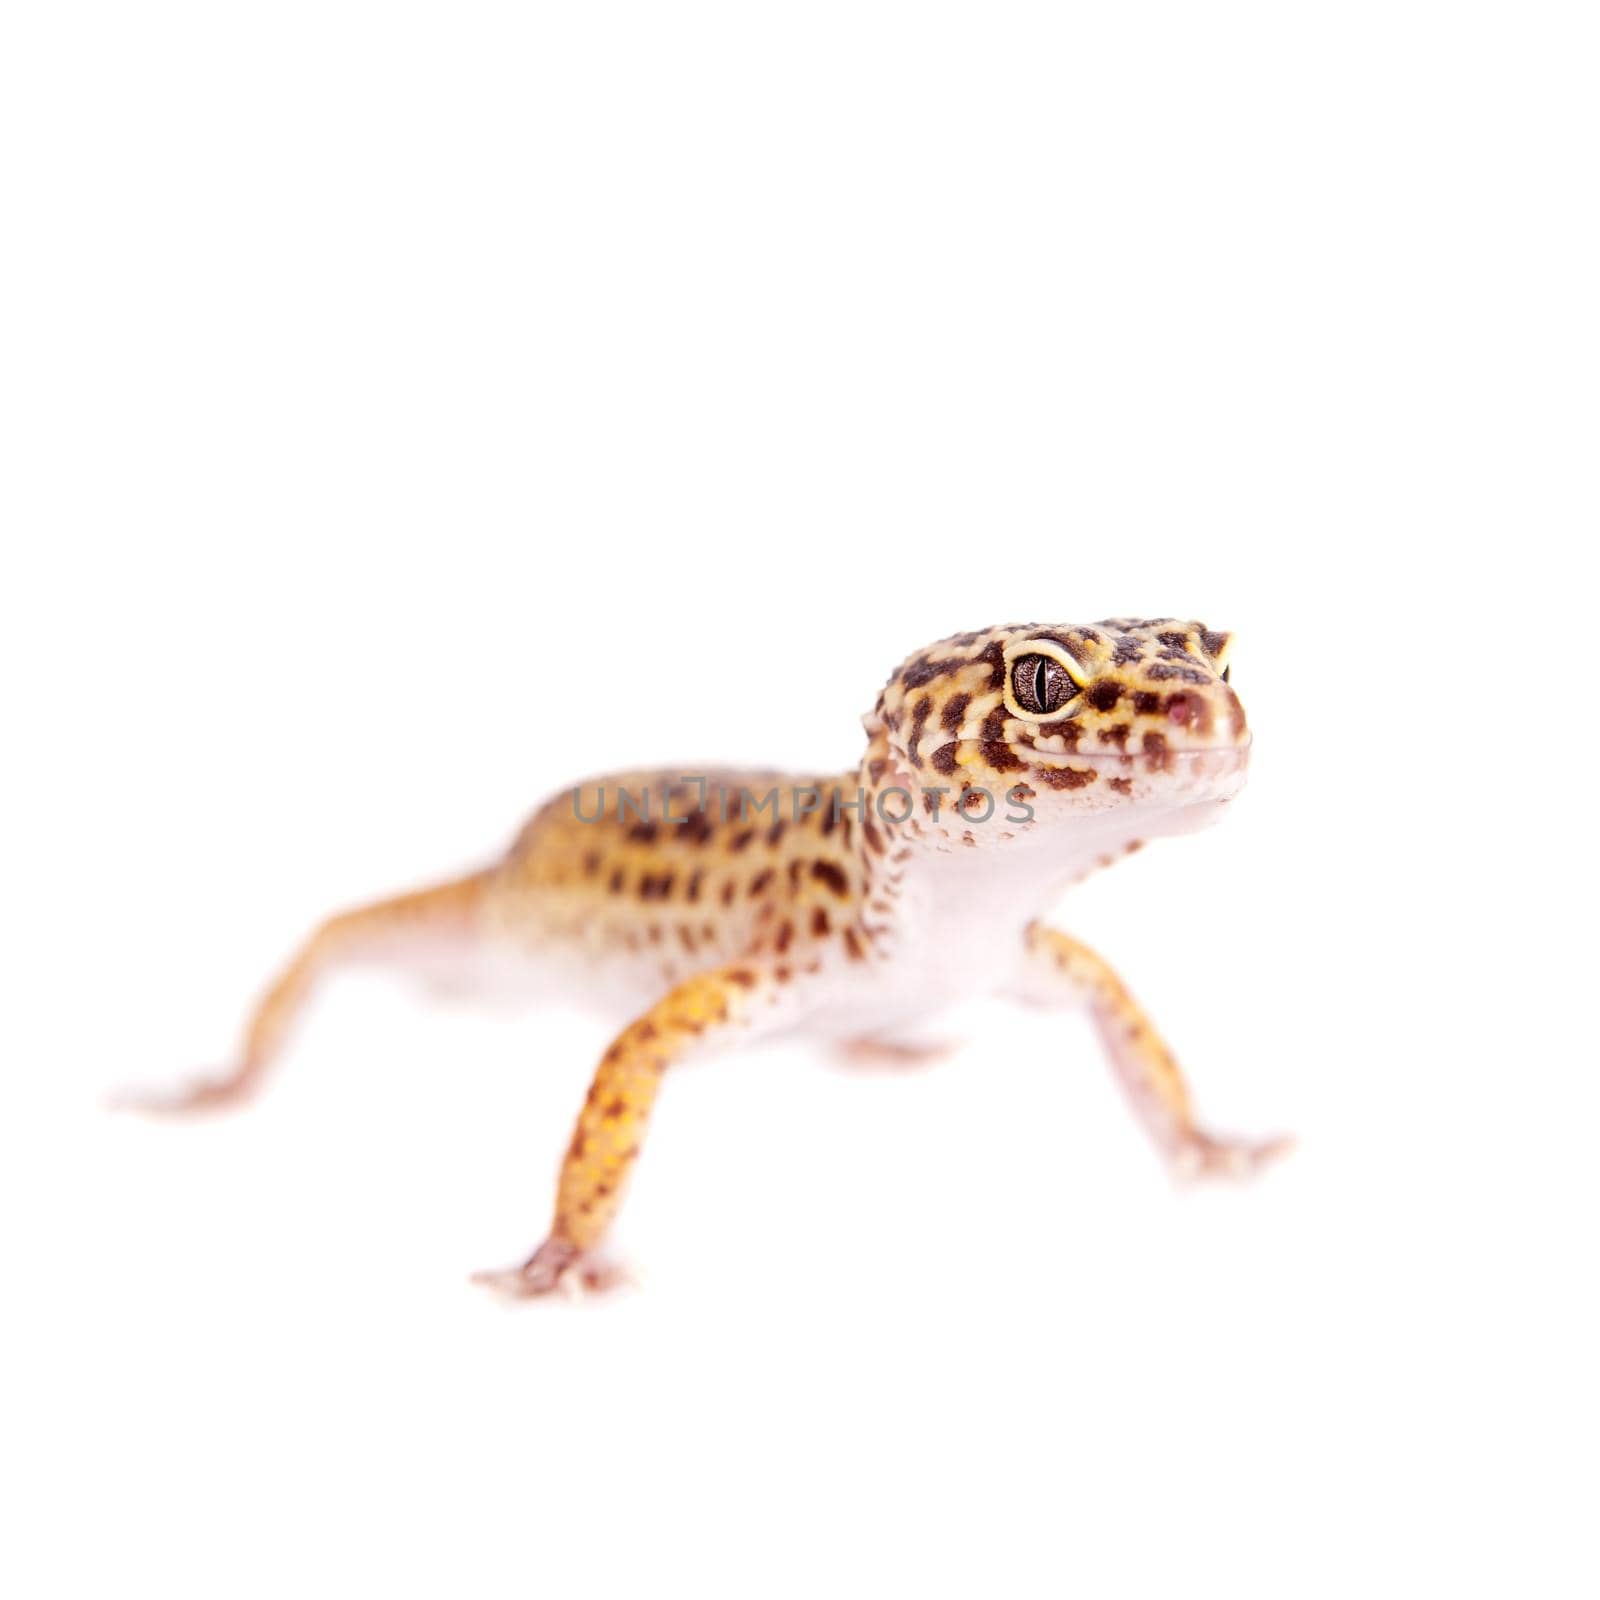 Tangerine Tremper Leopard Gecko on a white background